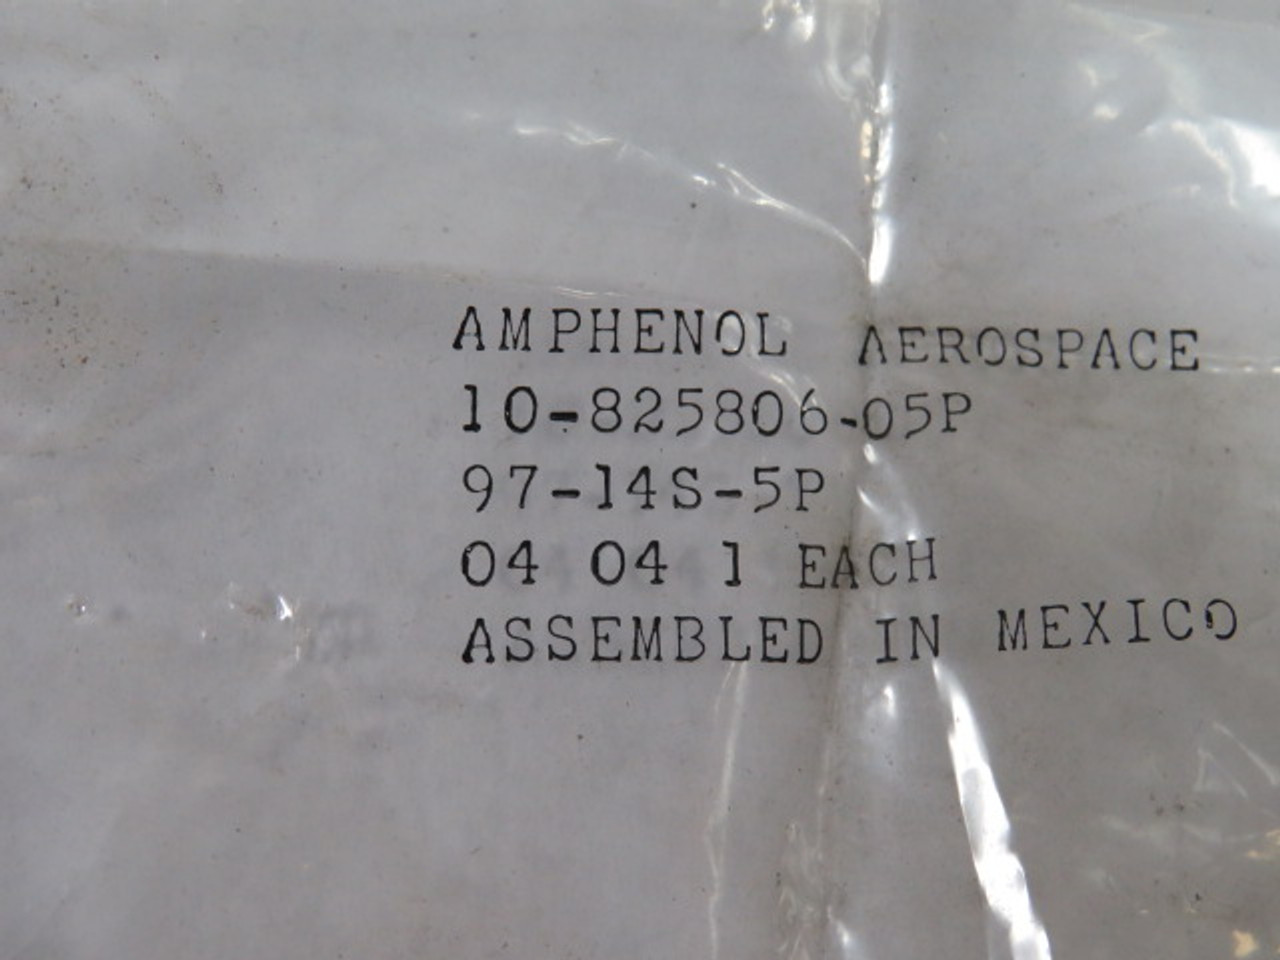 Amphenol-Aerospace 97-14S-5P Circular Insert Pin 5 Way ! NEW !